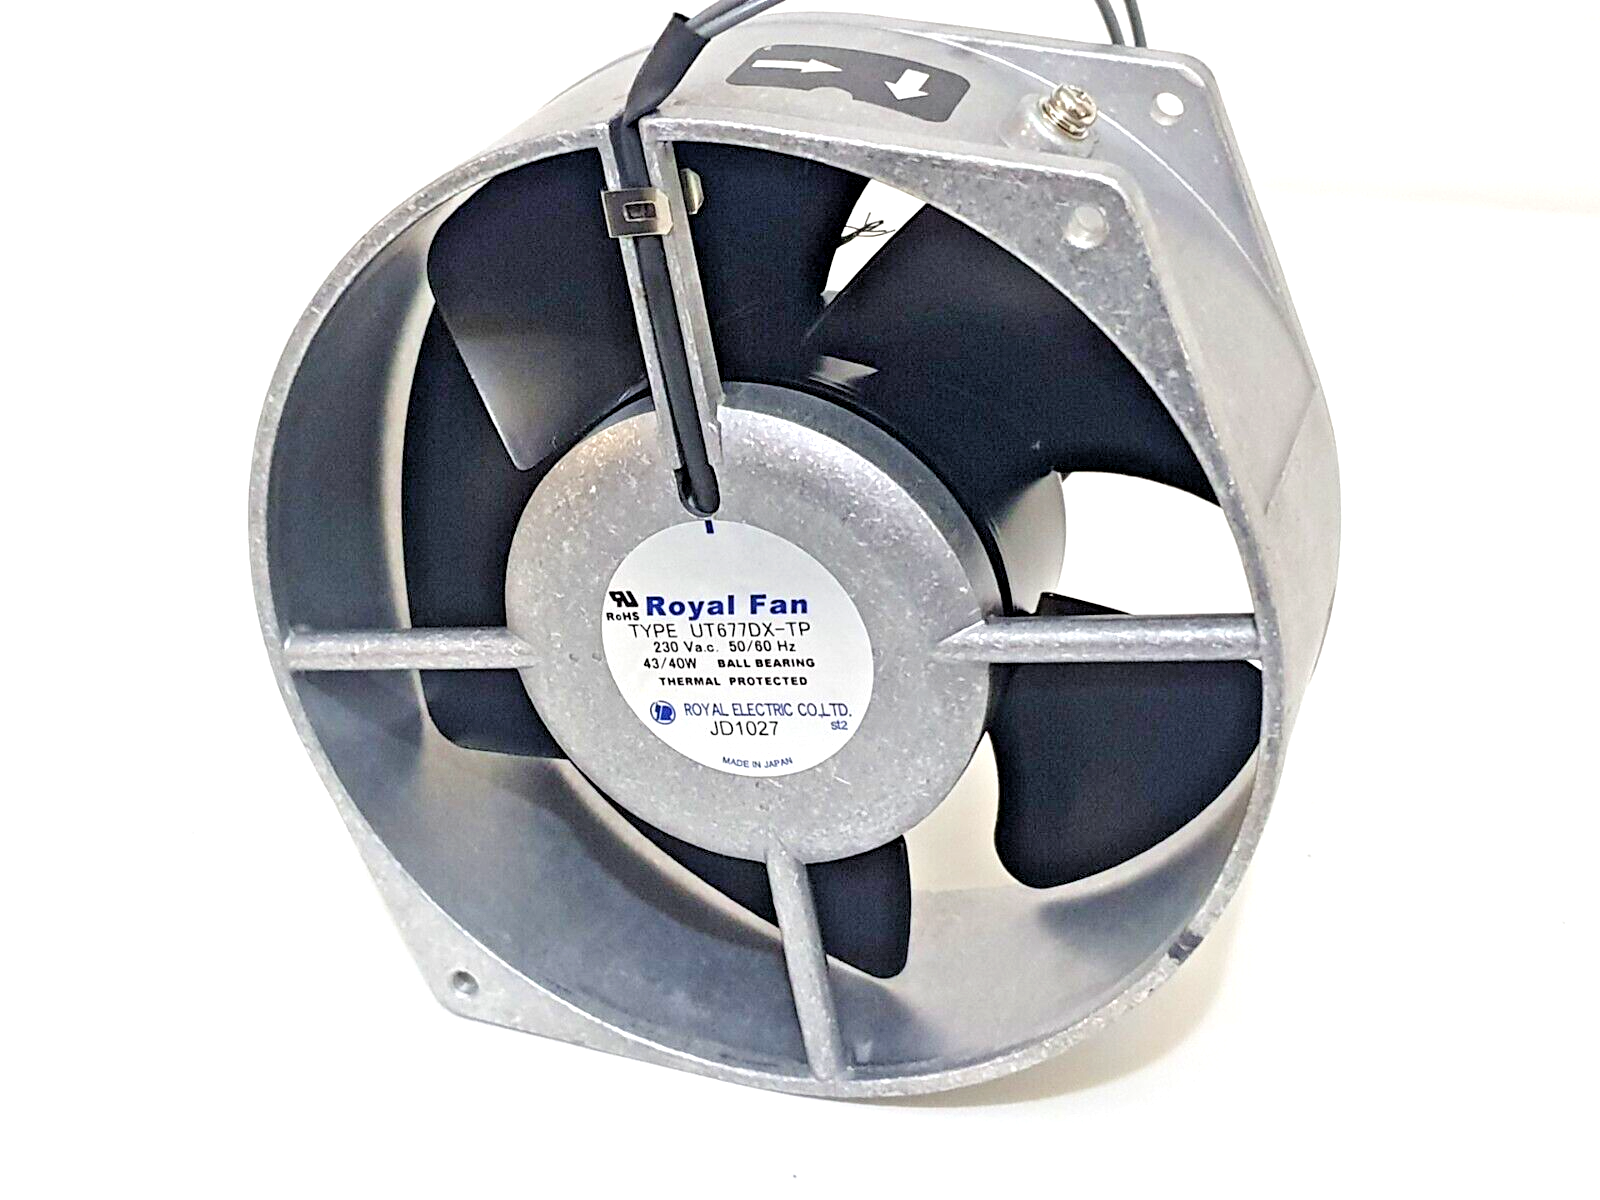 UT677DX-TP Royal Fan 230VAC Ball Bearing, 170mm, Thermal Protected